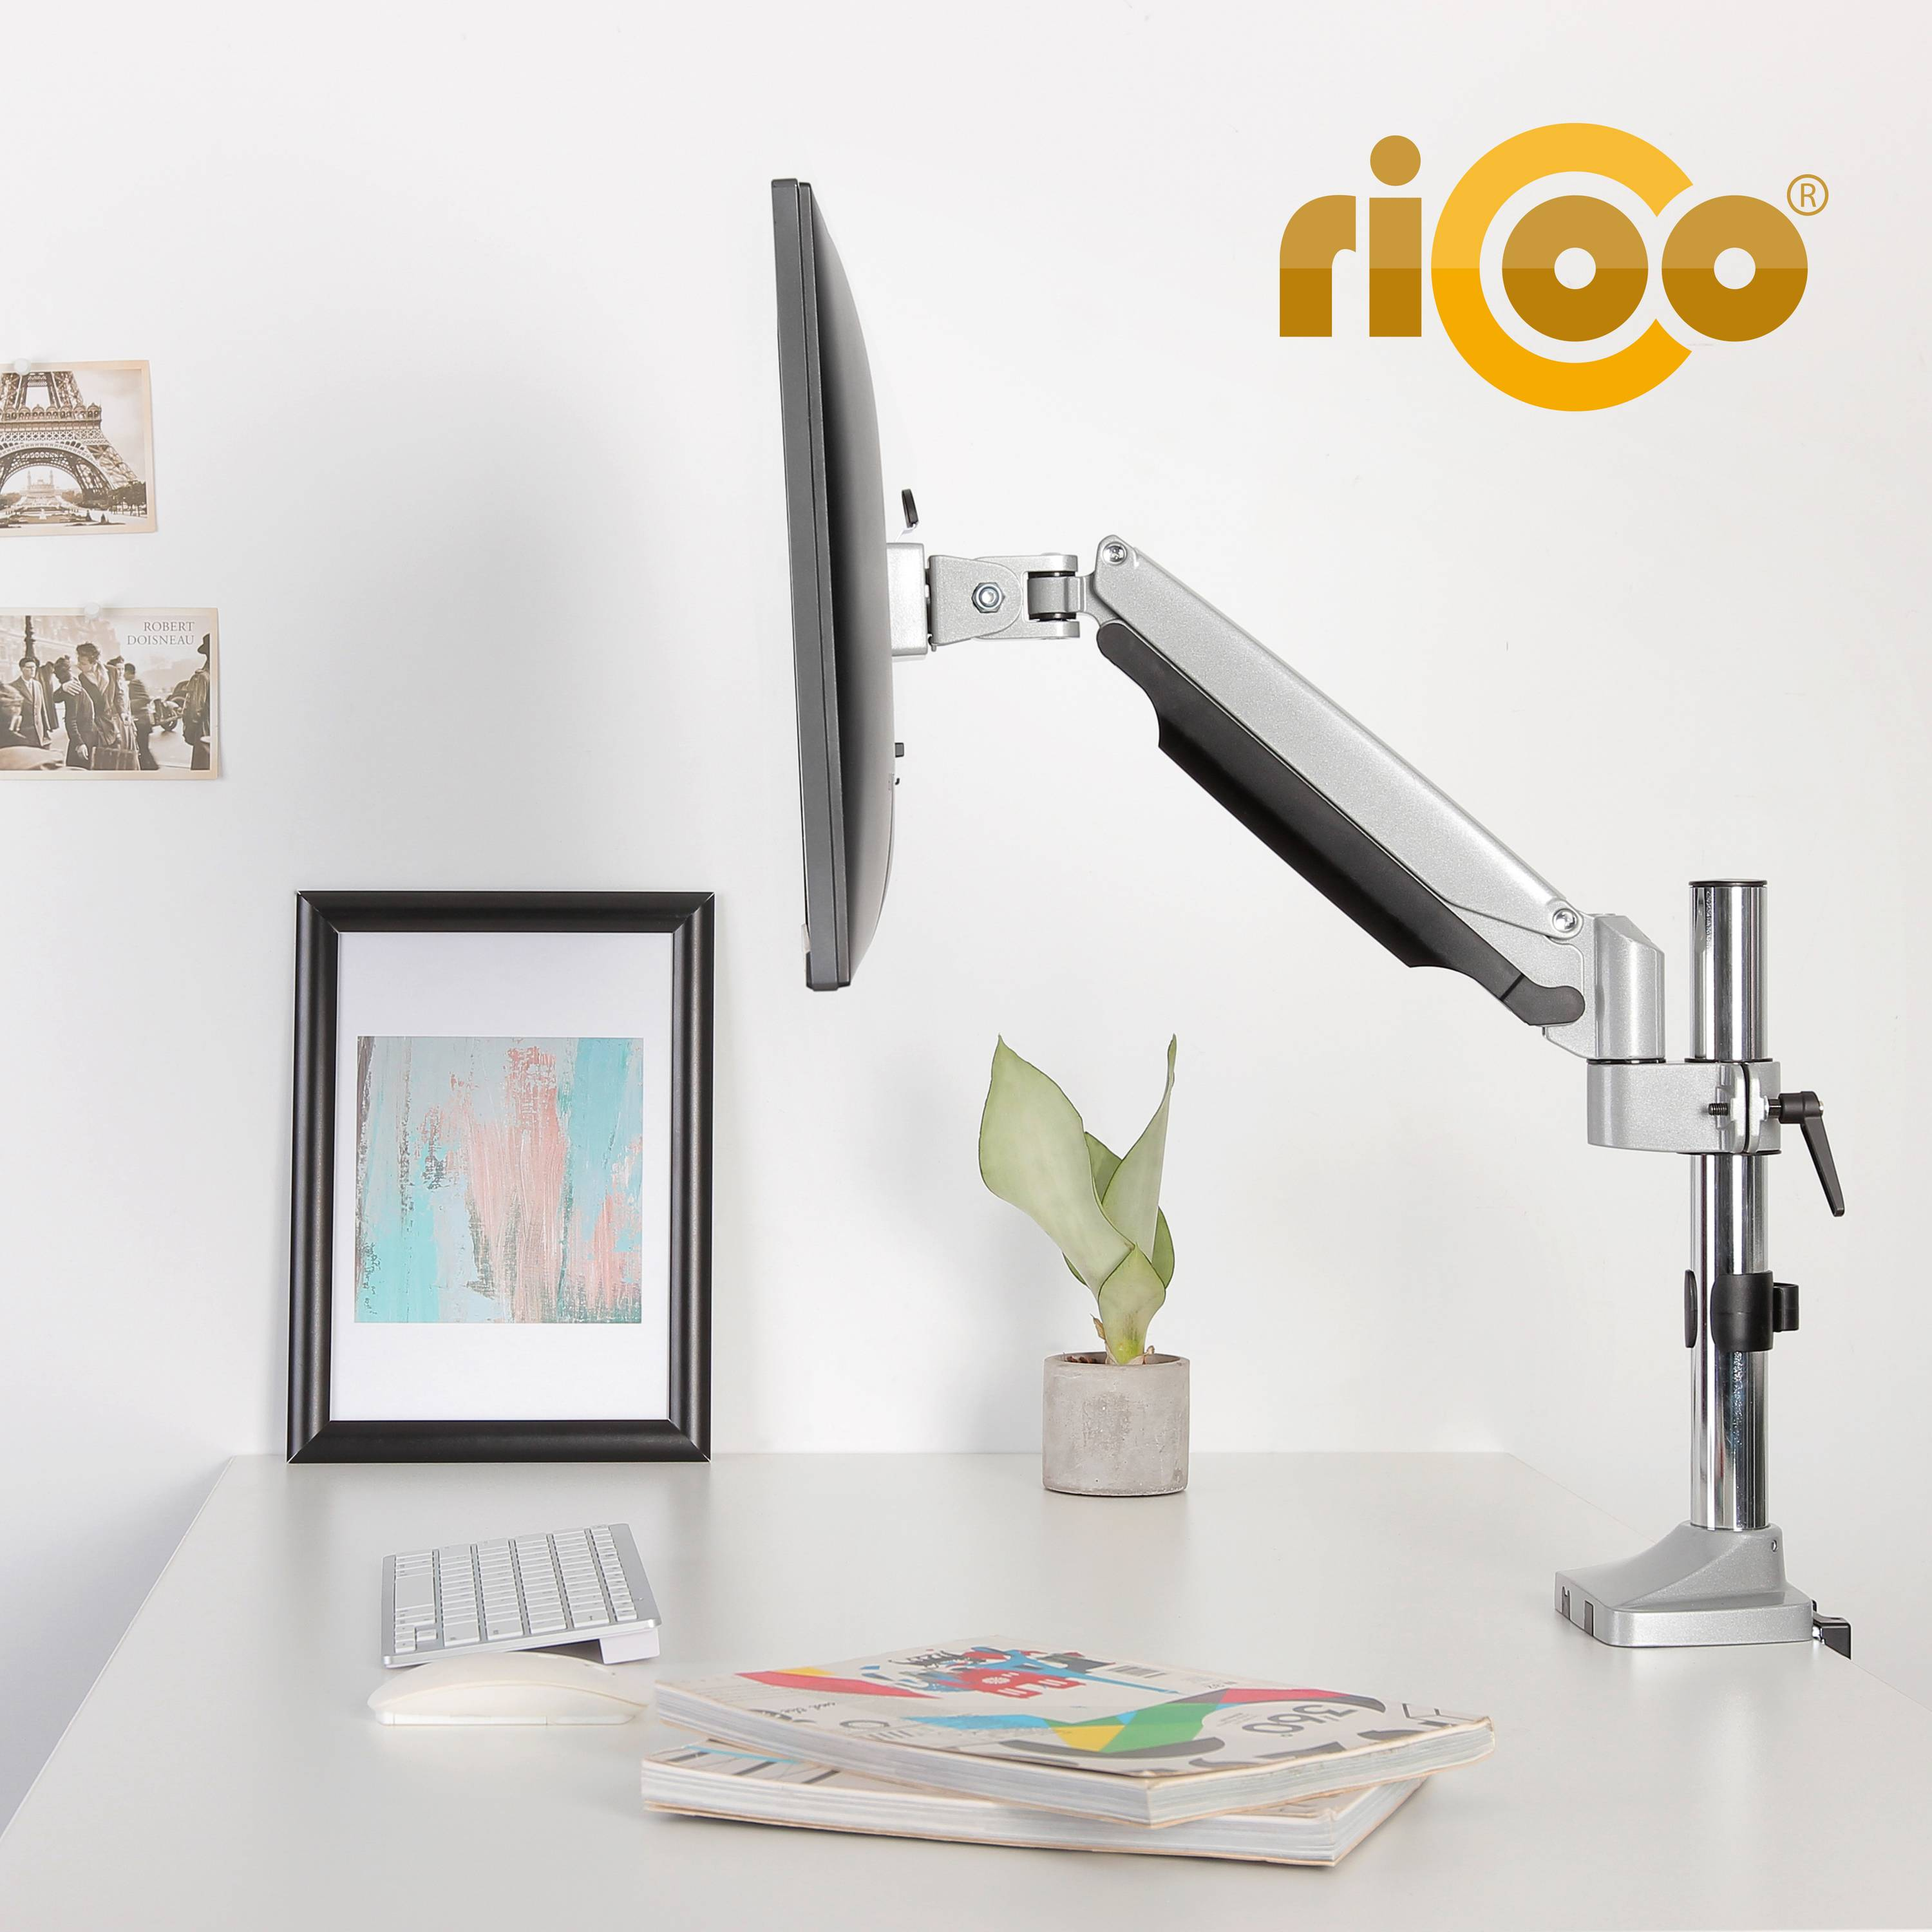 RICOO TS1011 silber Monitor Tischhalterung